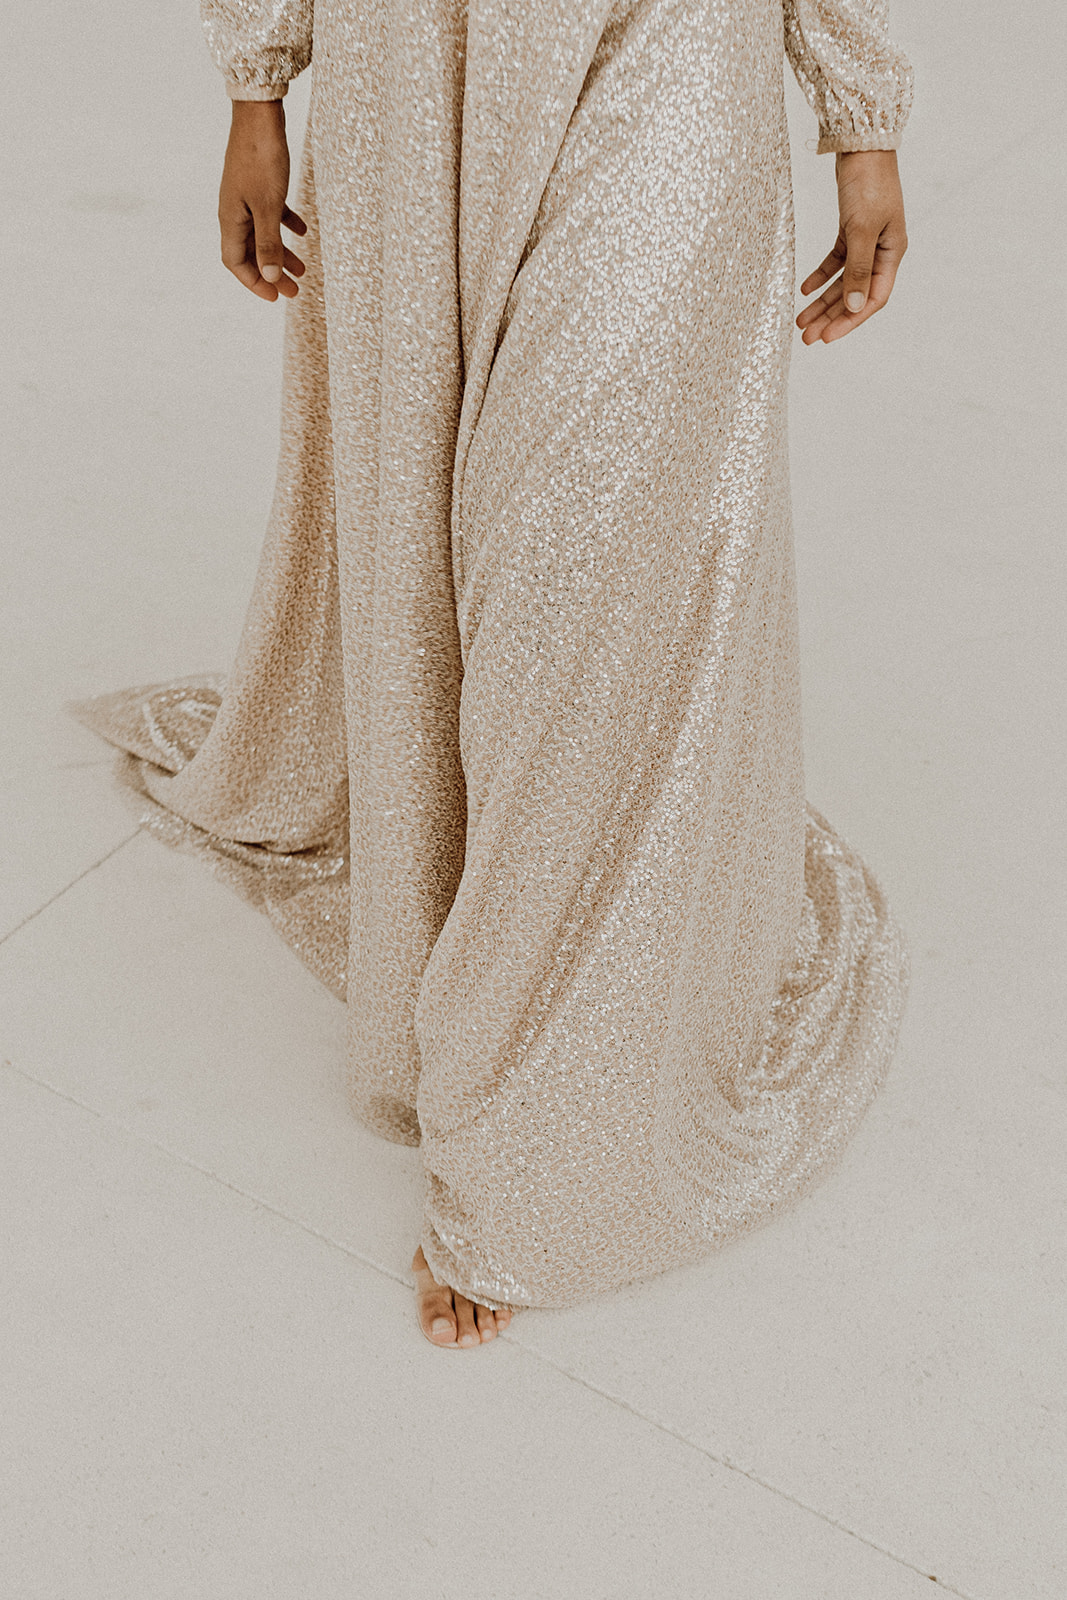 Elise Martimort Collection 2021 - Robes de mariée - Blog Mariage Madame C